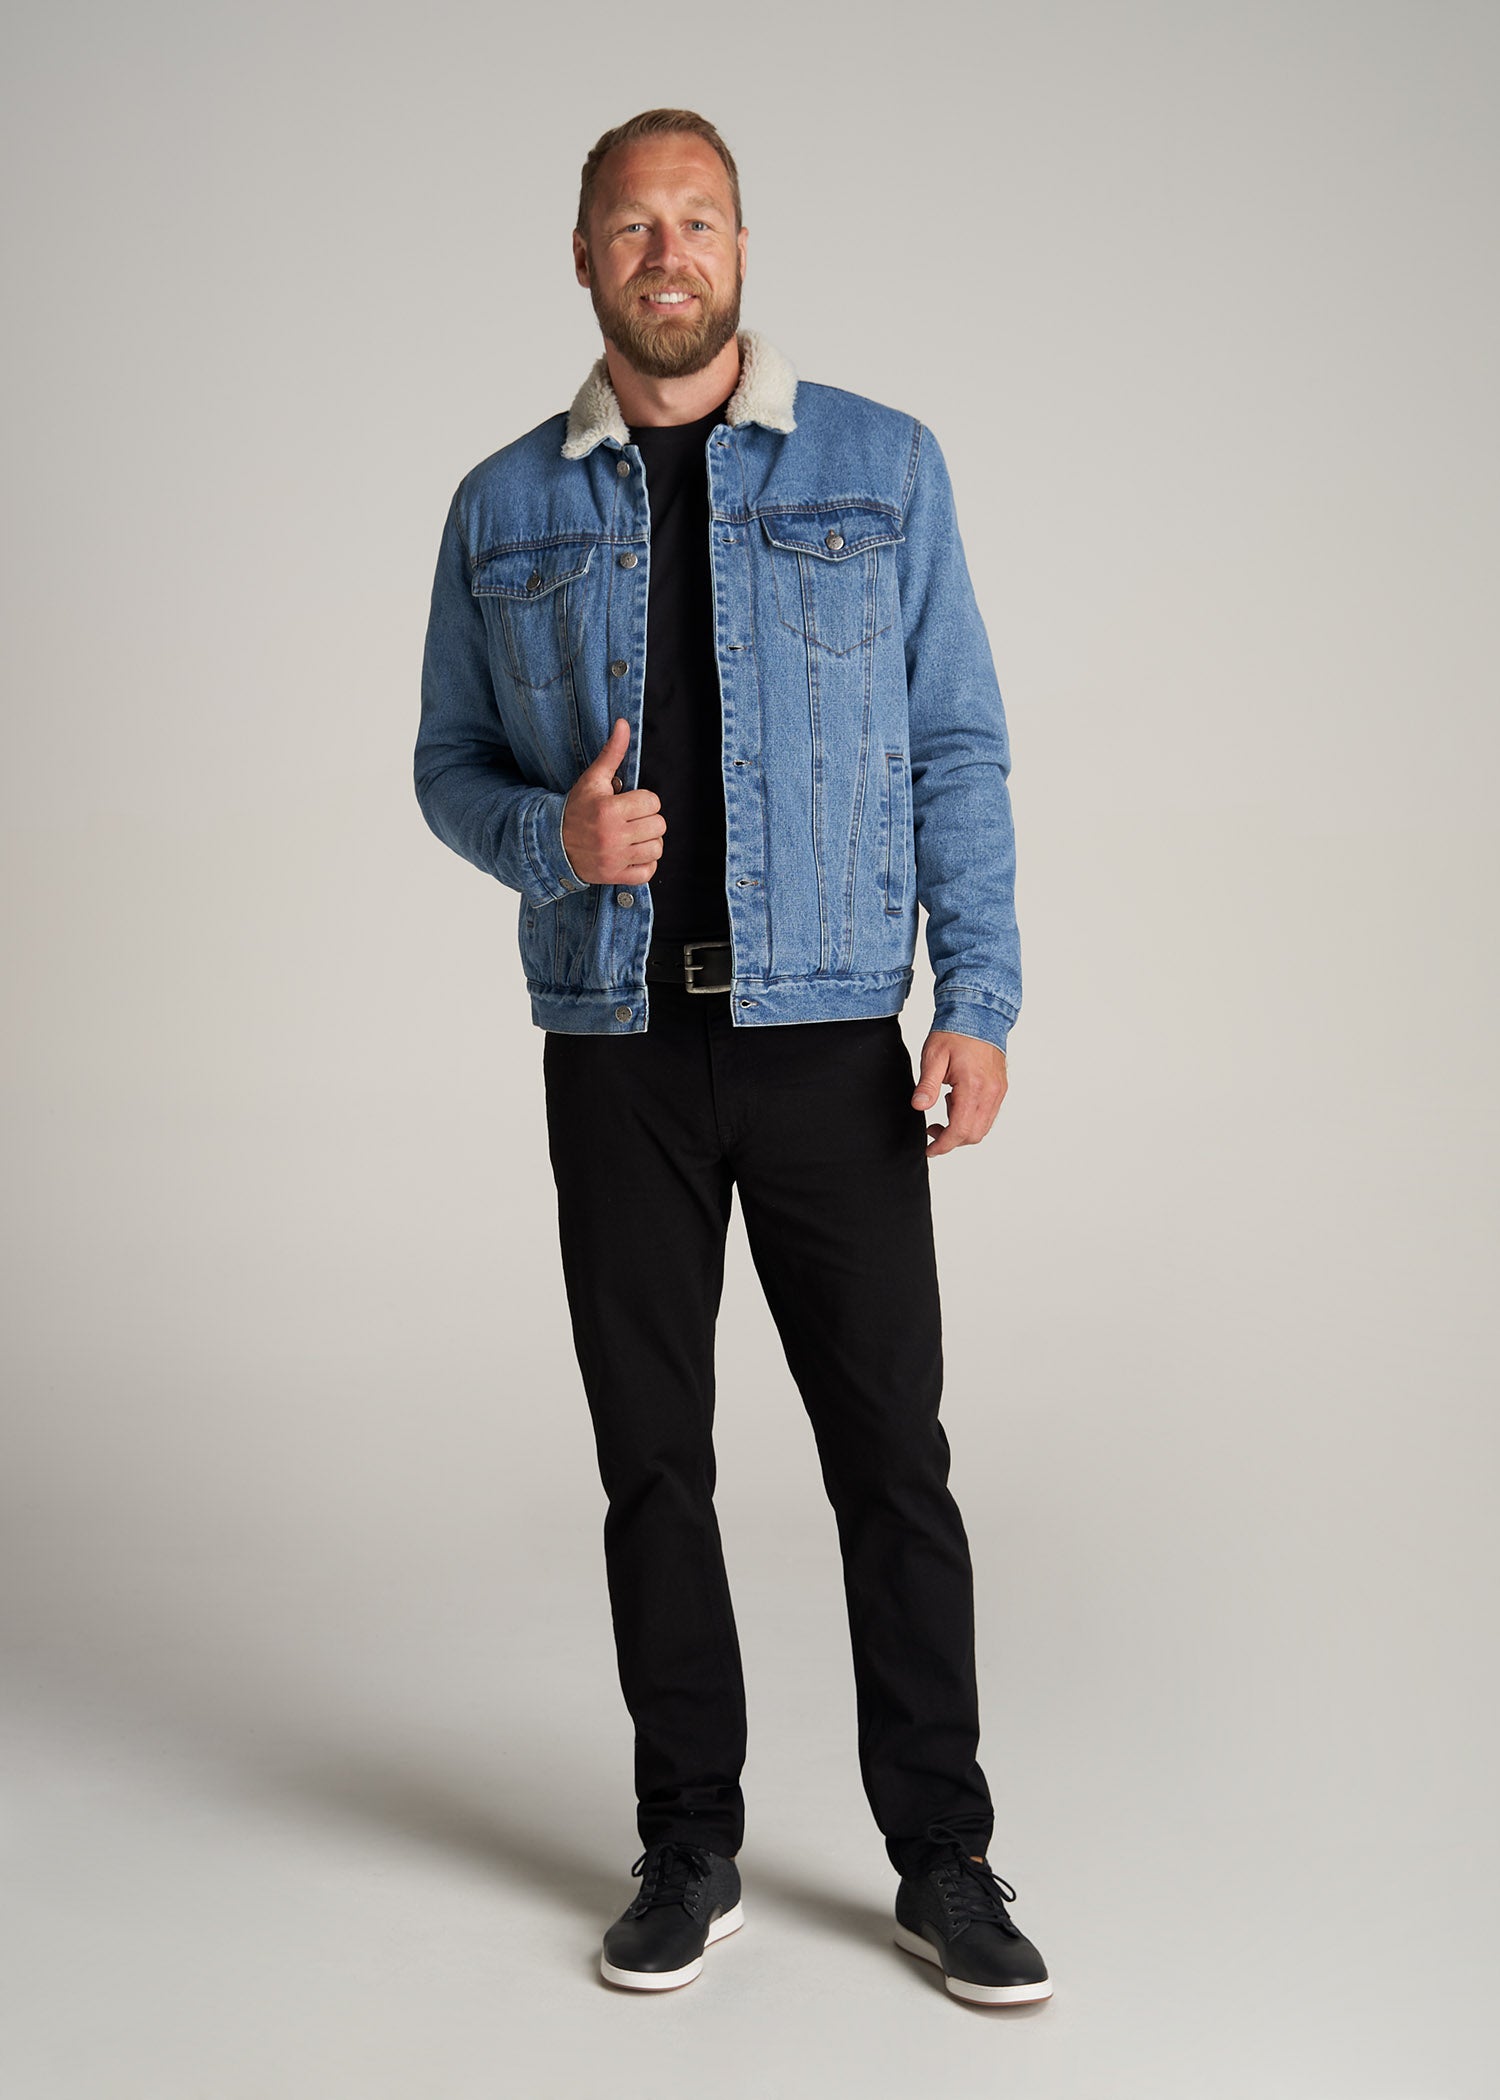 30 Trending Styles Of Denim Jackets for Men and Women